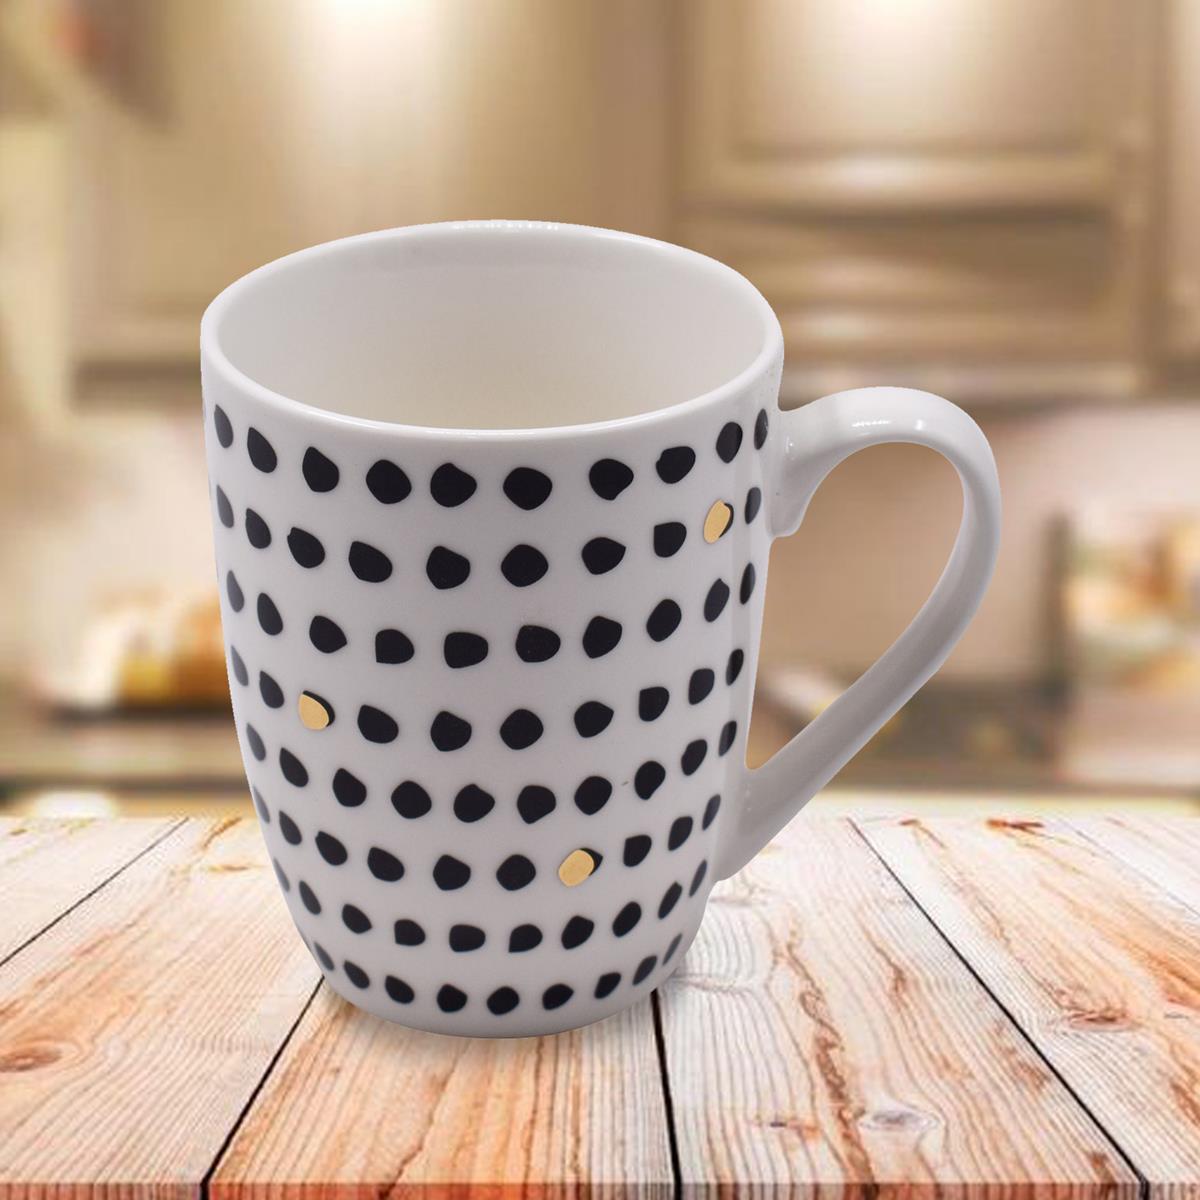 Printed Ceramic Coffee or Tea Mug with handle - 325ml (BPM4338-A)